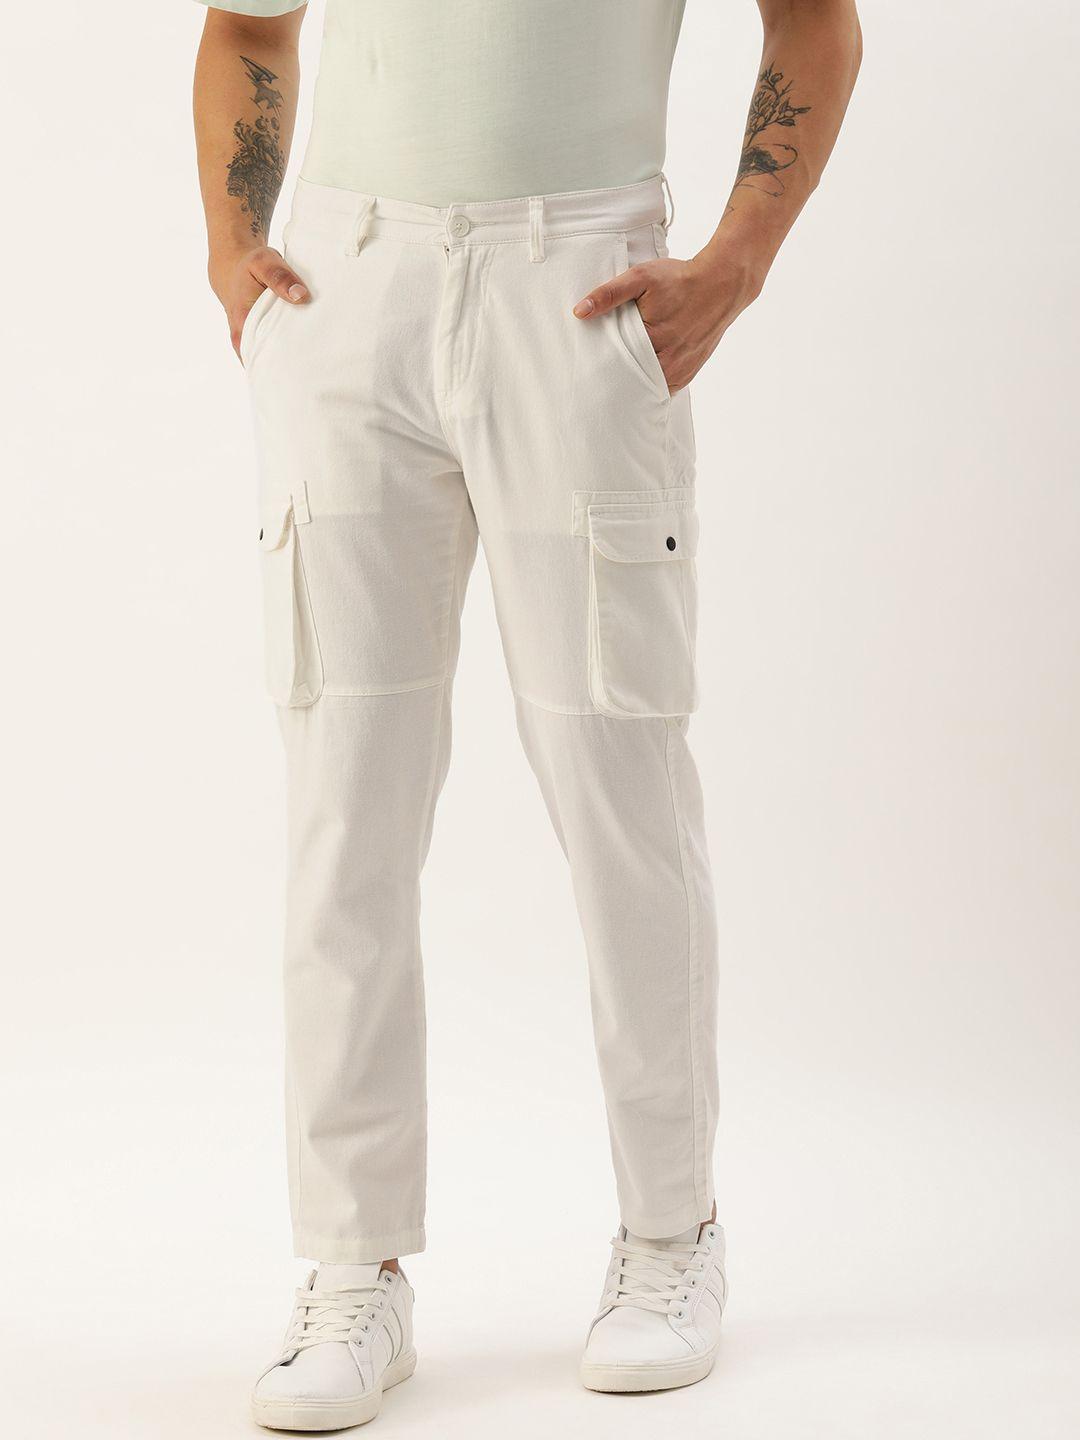 ivoc-men-solid-regular-fit-cargos-trousers